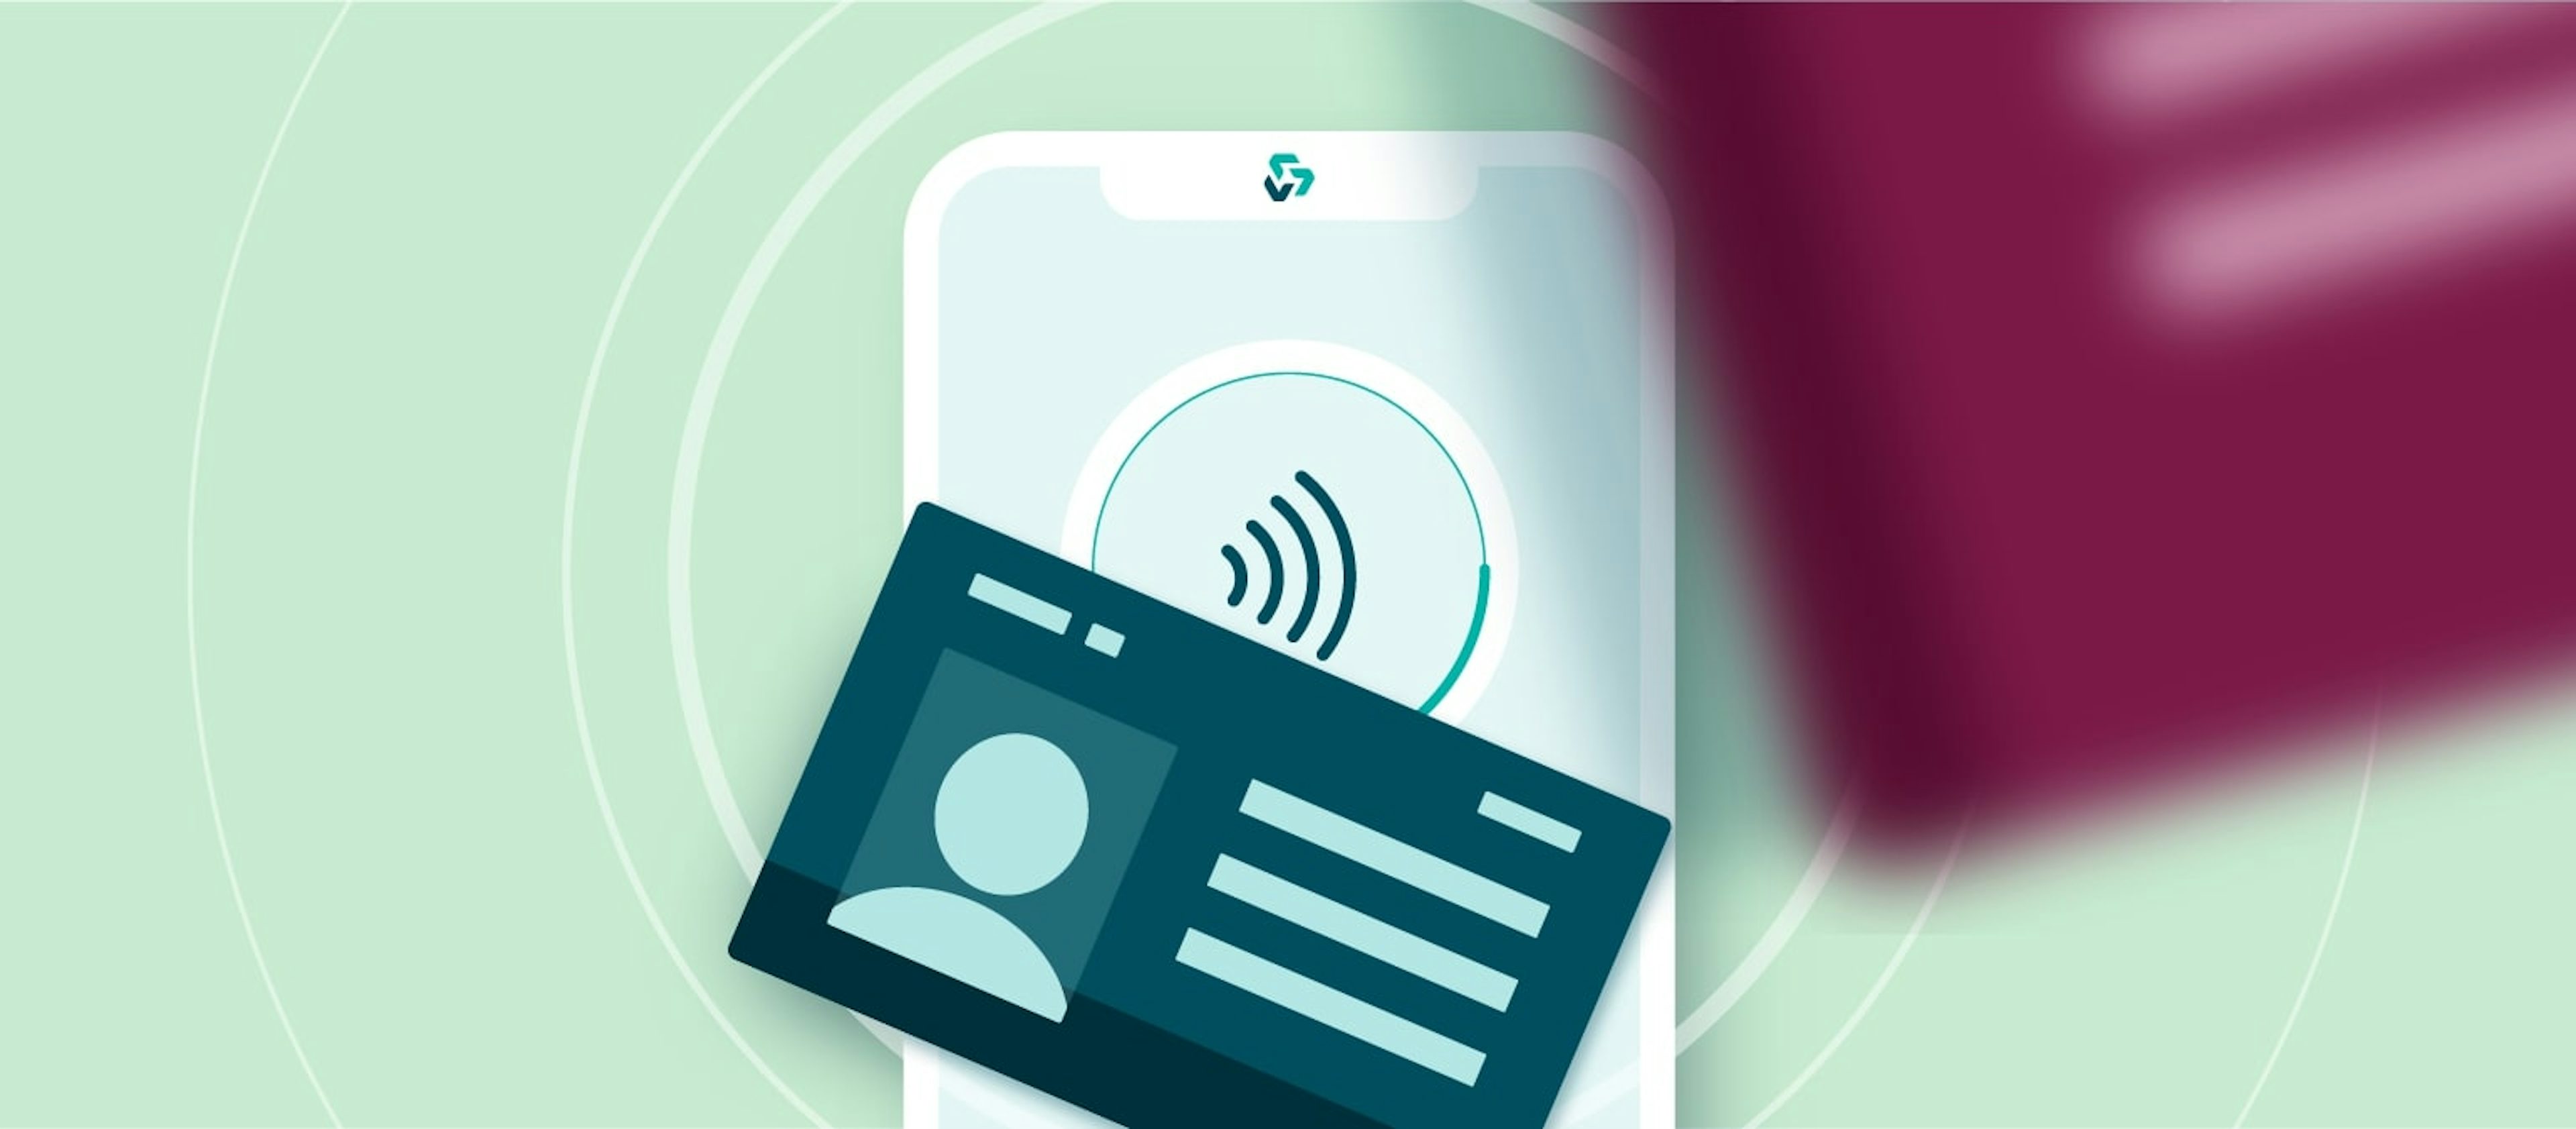 Veriff Launches NFC Identity Verification Tool